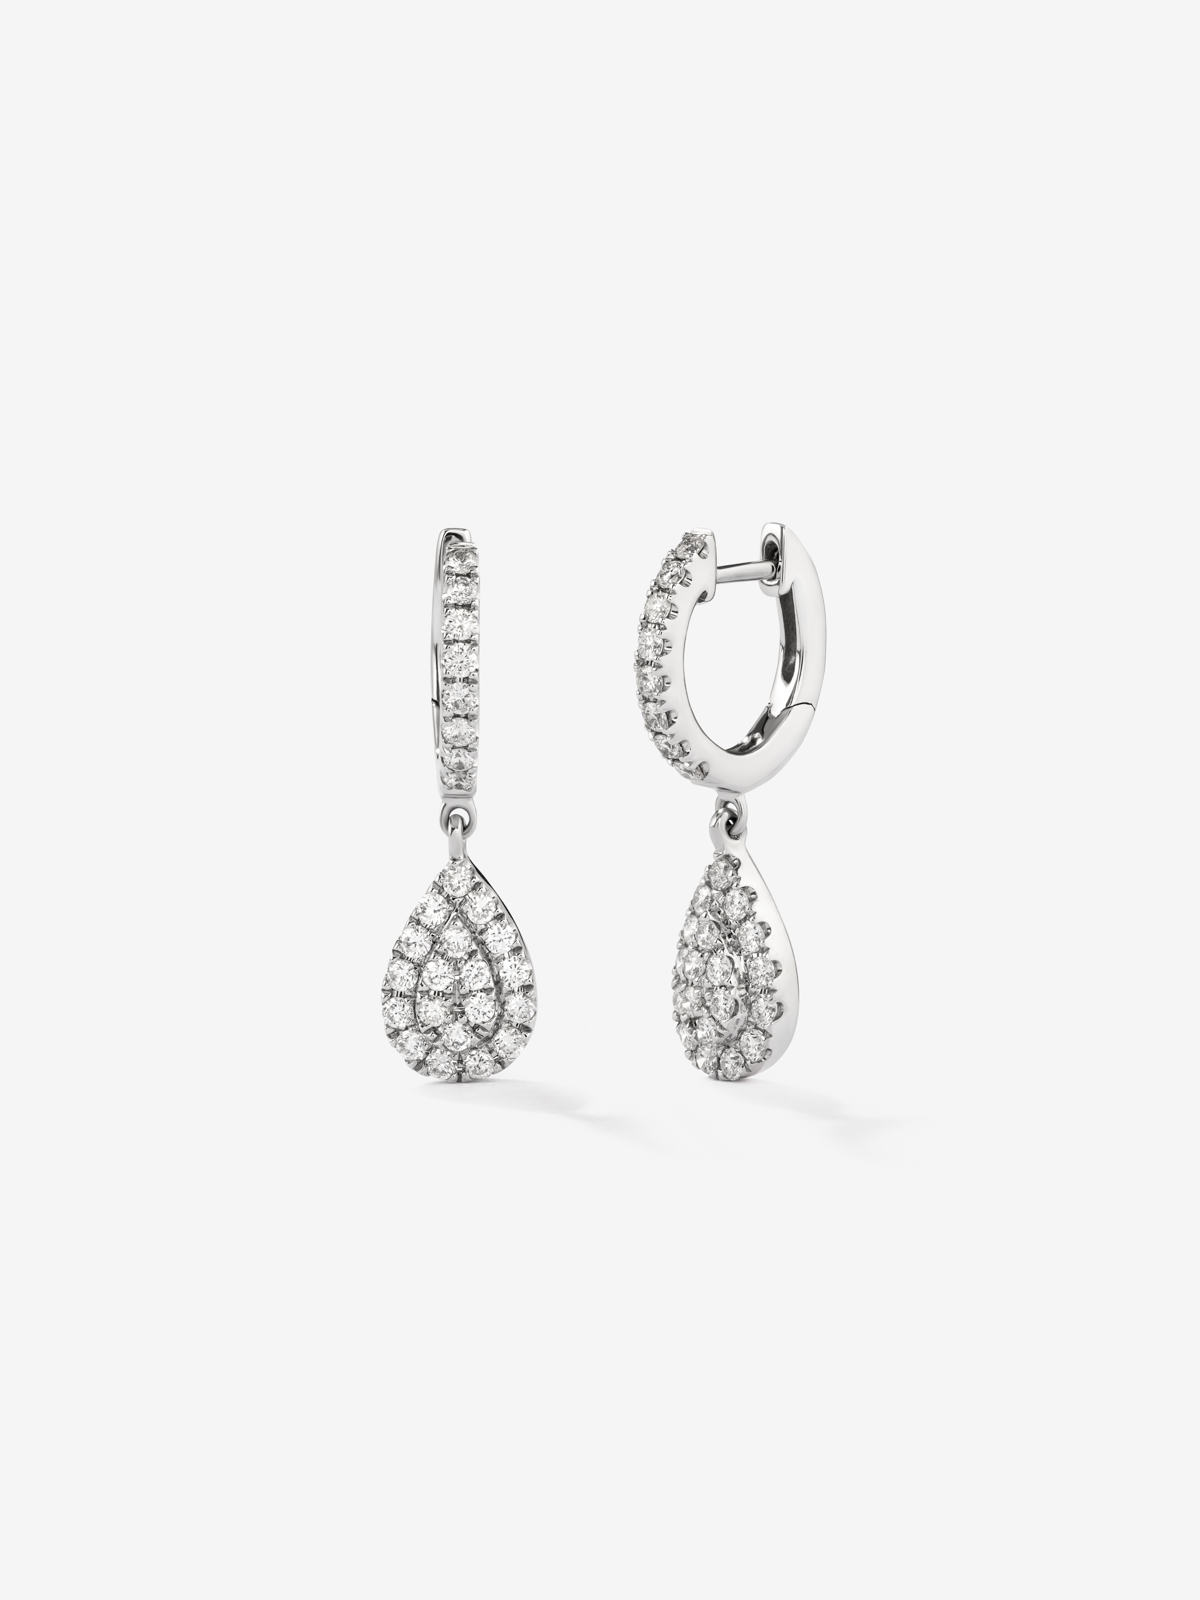 18K white gold hoop earrings with diamonds